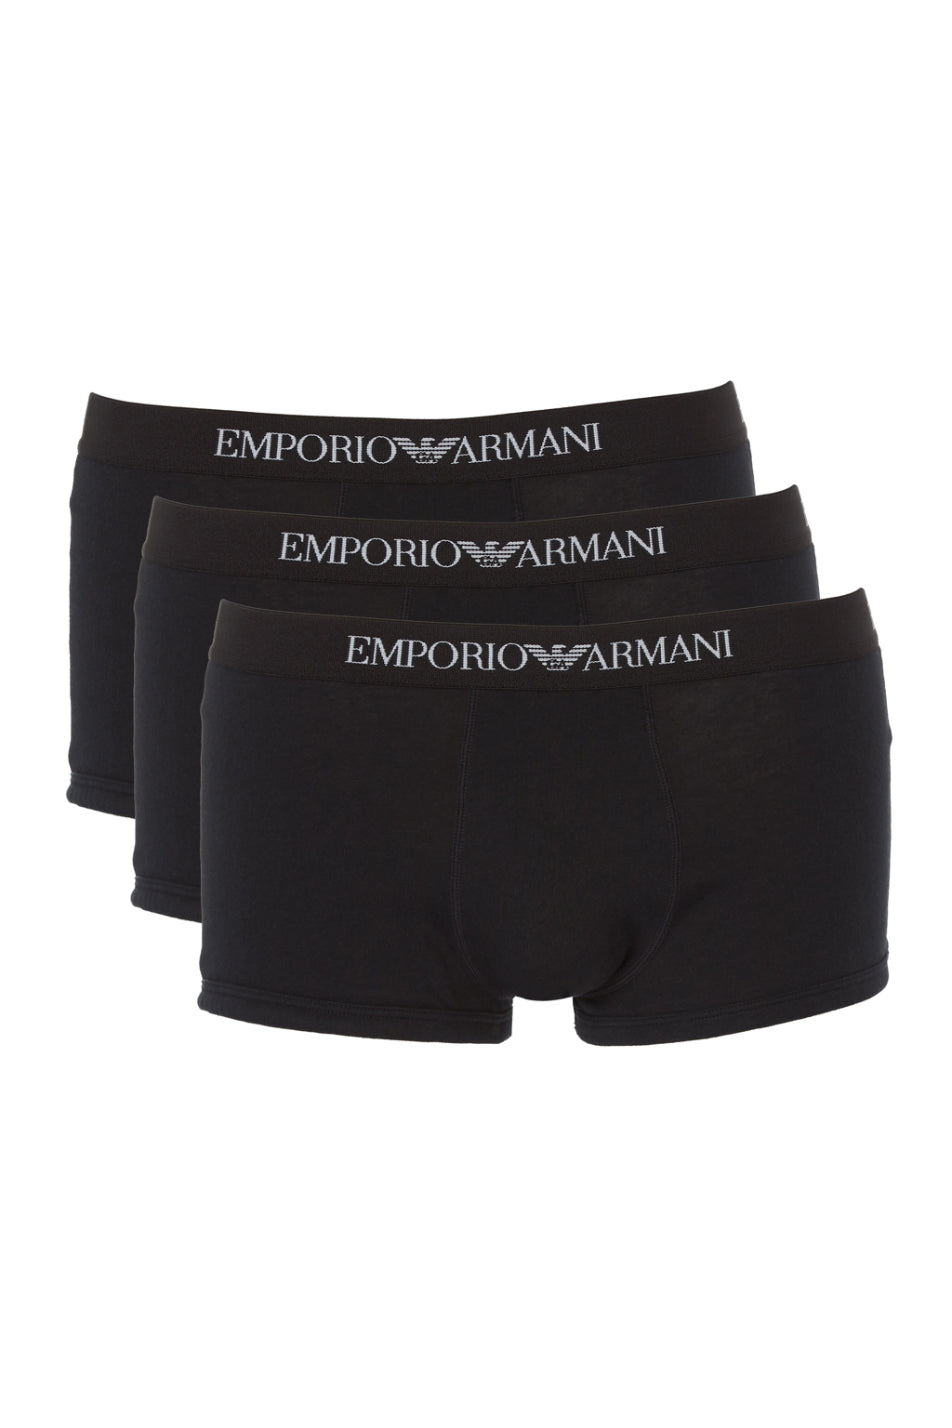 Emporio Armani 3 Pack Men's Trunk